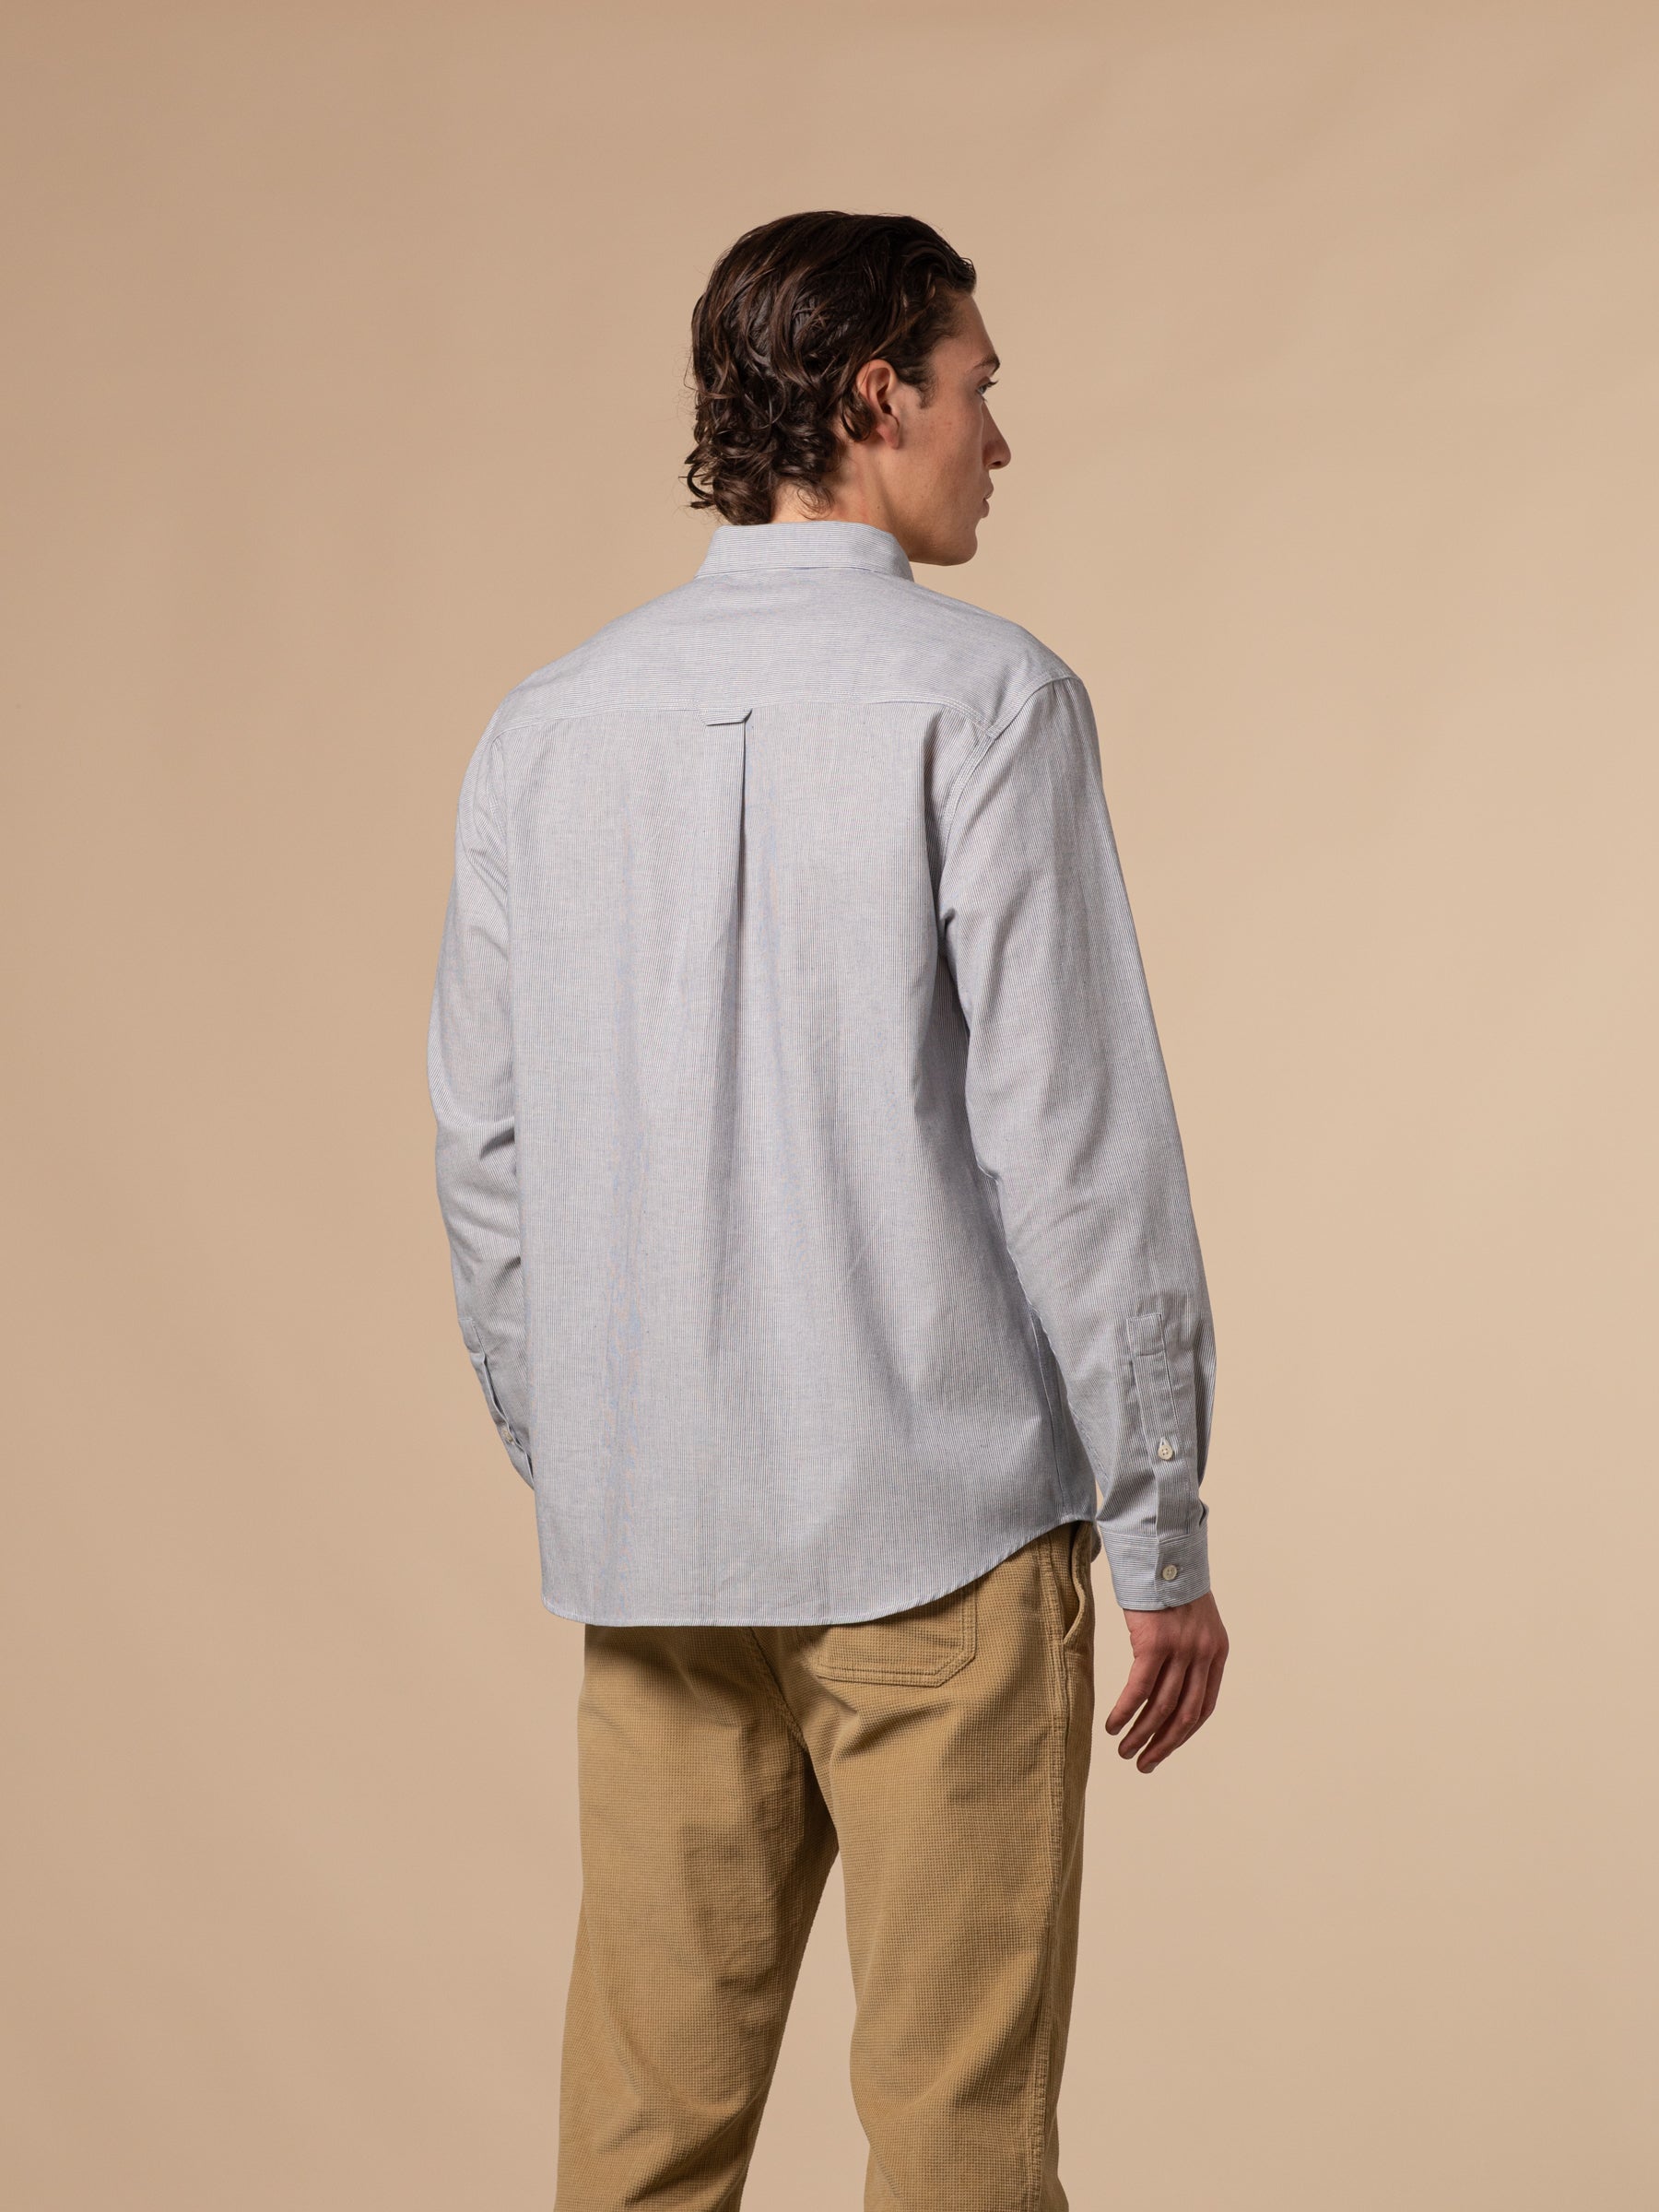 The rear profile of the KESTIN Raeburn Oxford Shirt in a blue and white stripe.